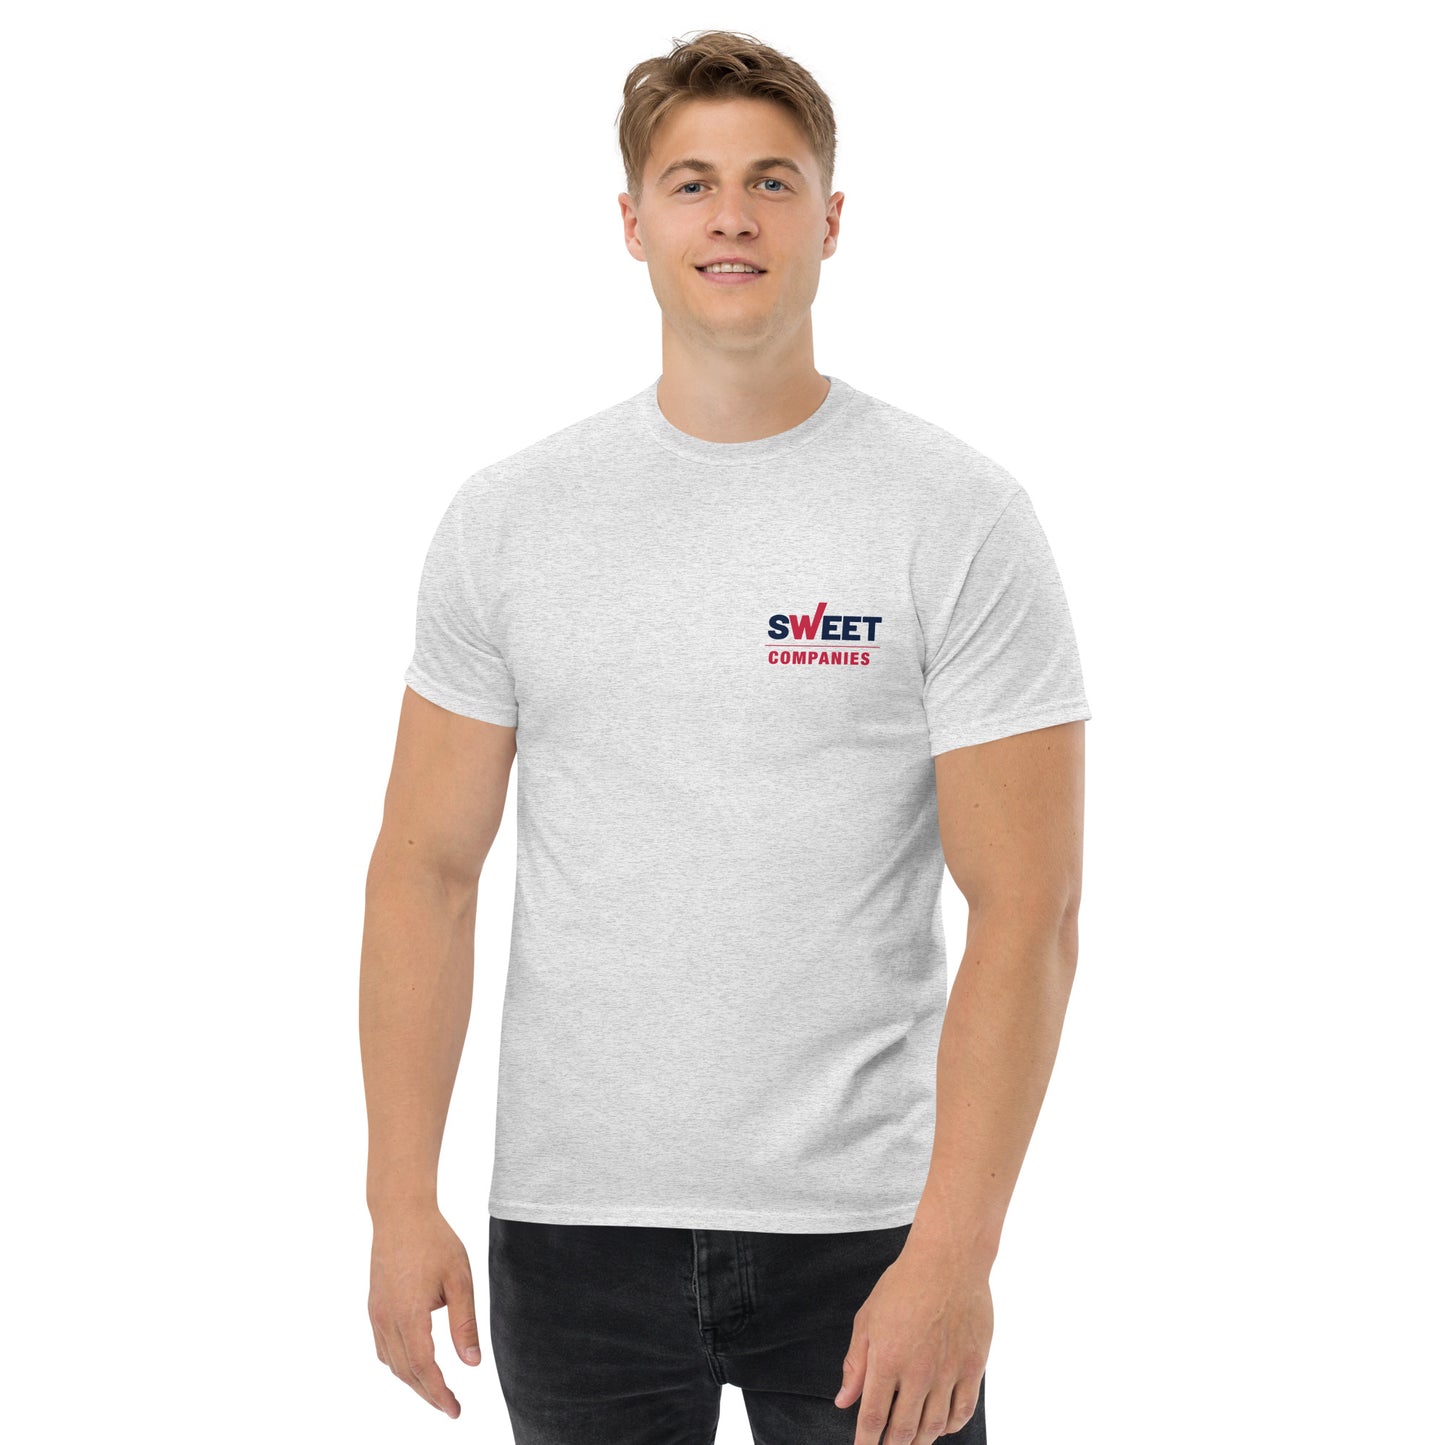 Sweet Companies T-Shirt